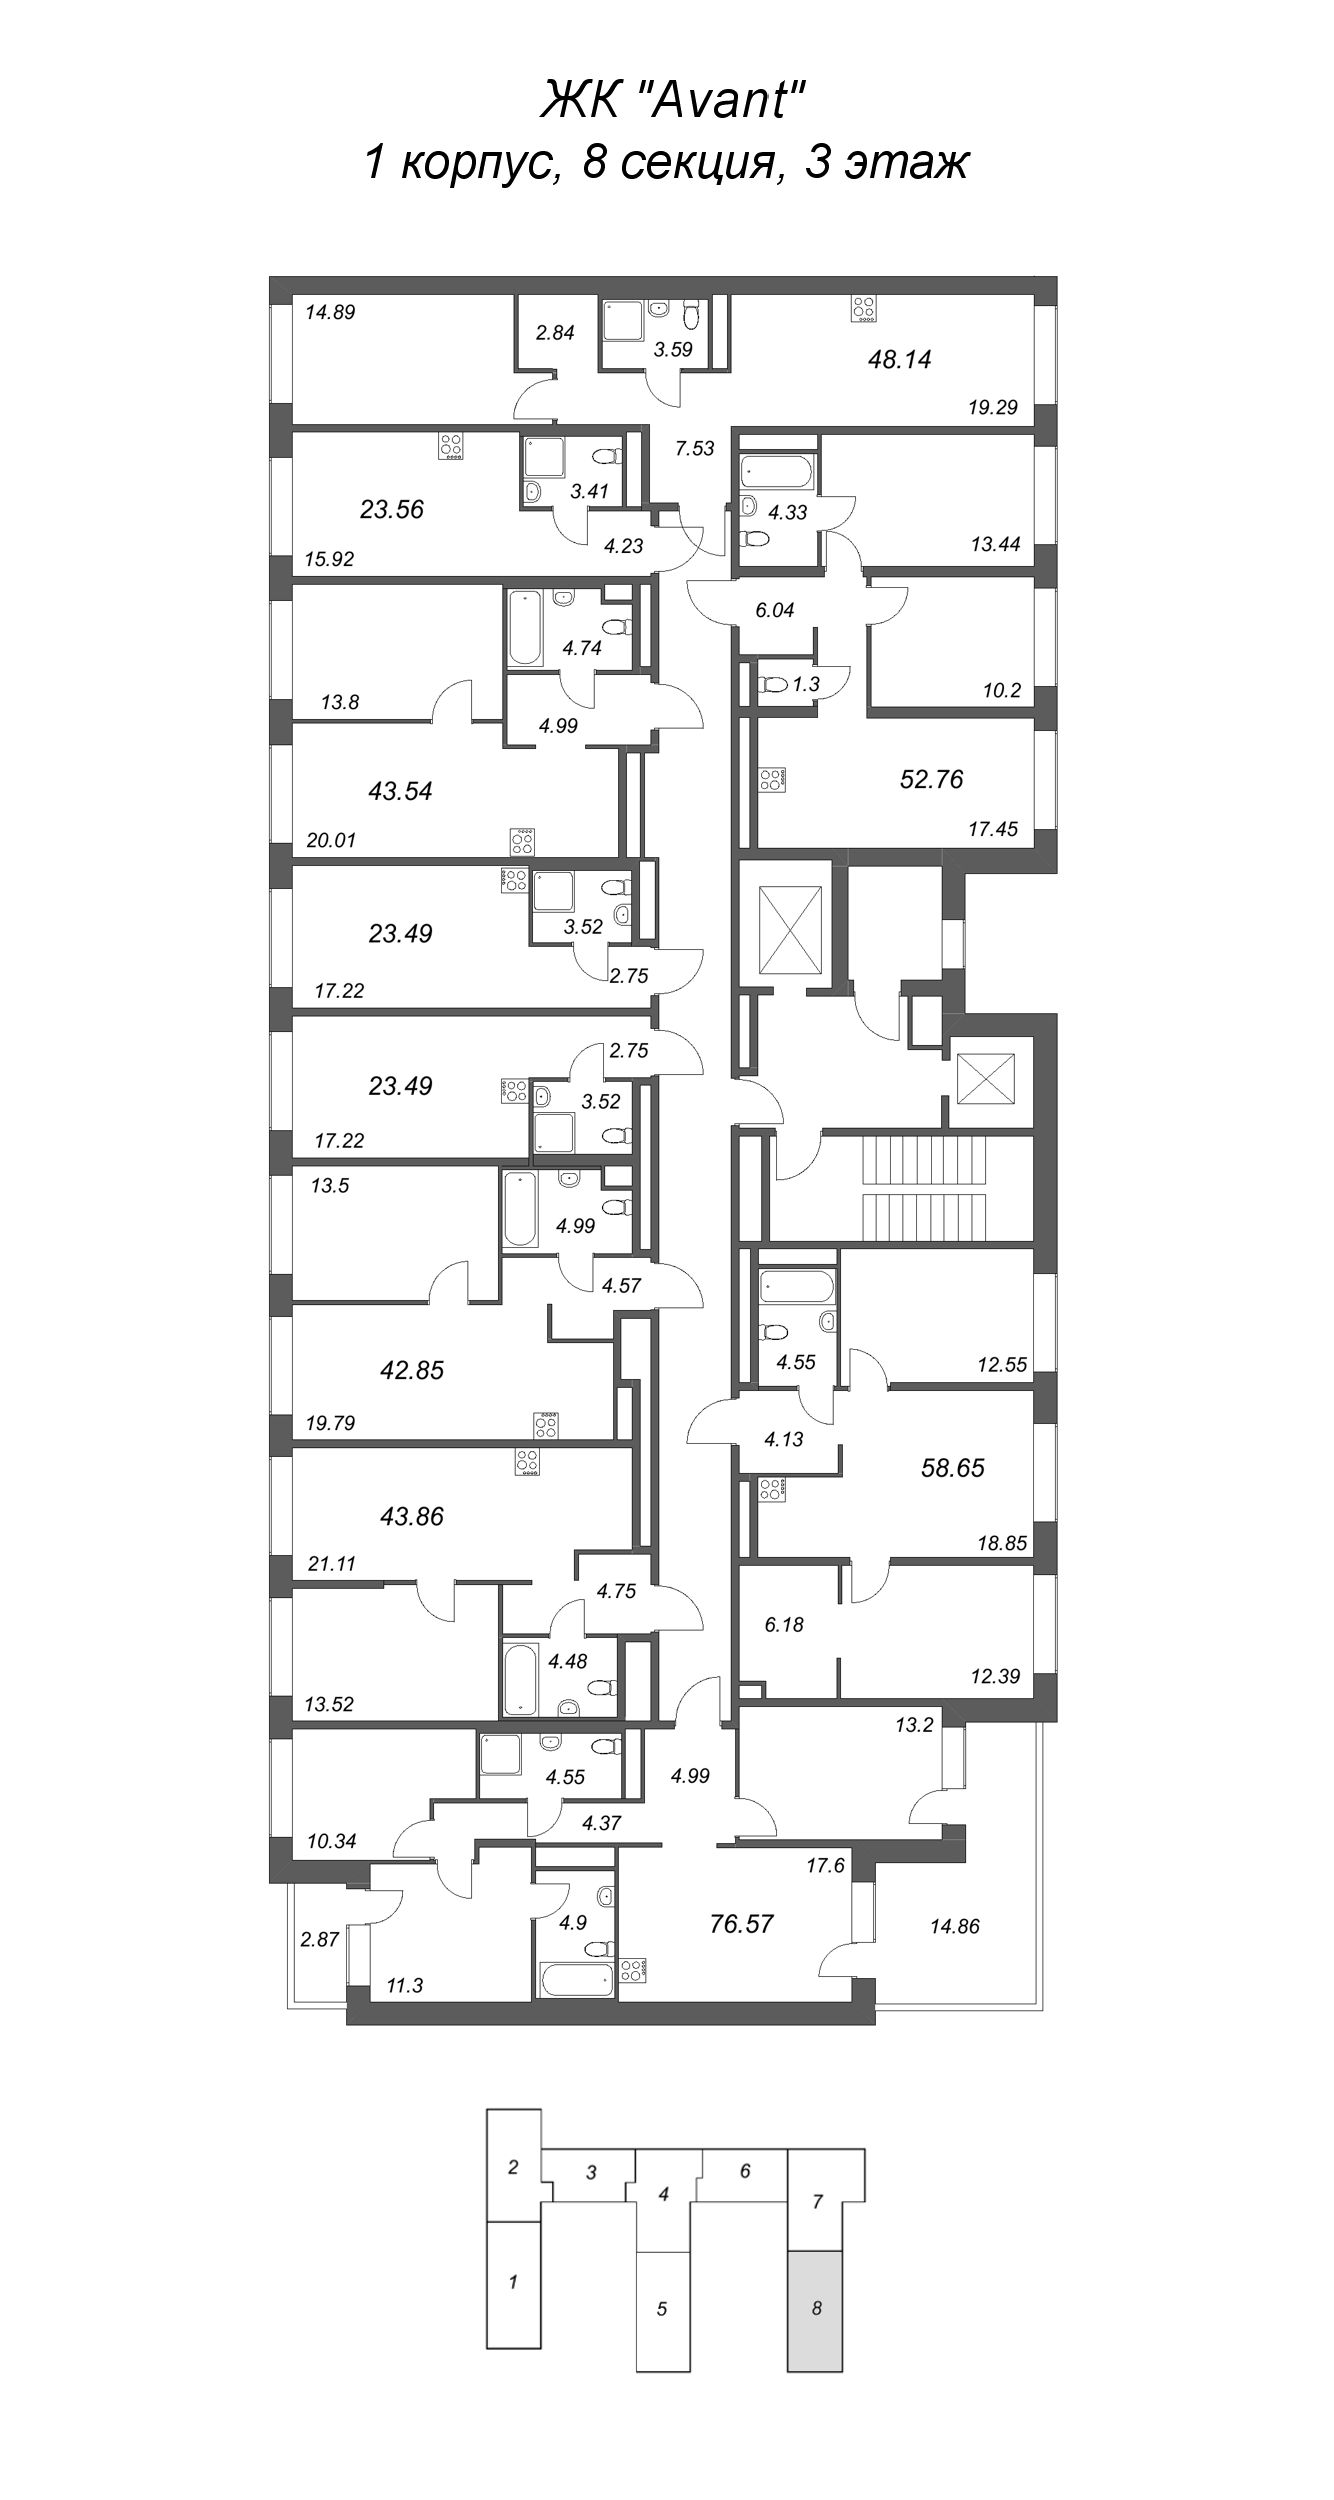 3-комнатная (Евро) квартира, 52.76 м² - планировка этажа